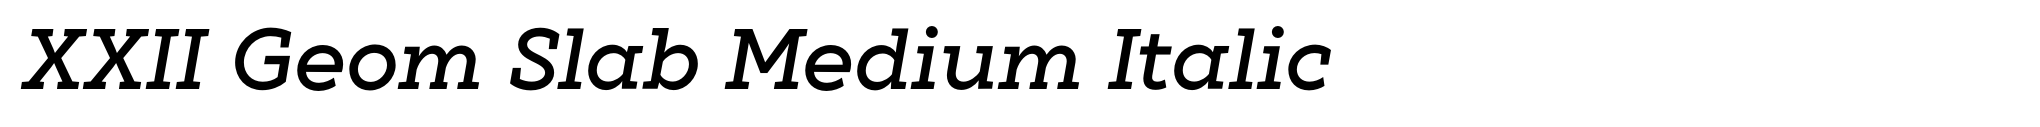 XXII Geom Slab Medium Italic image